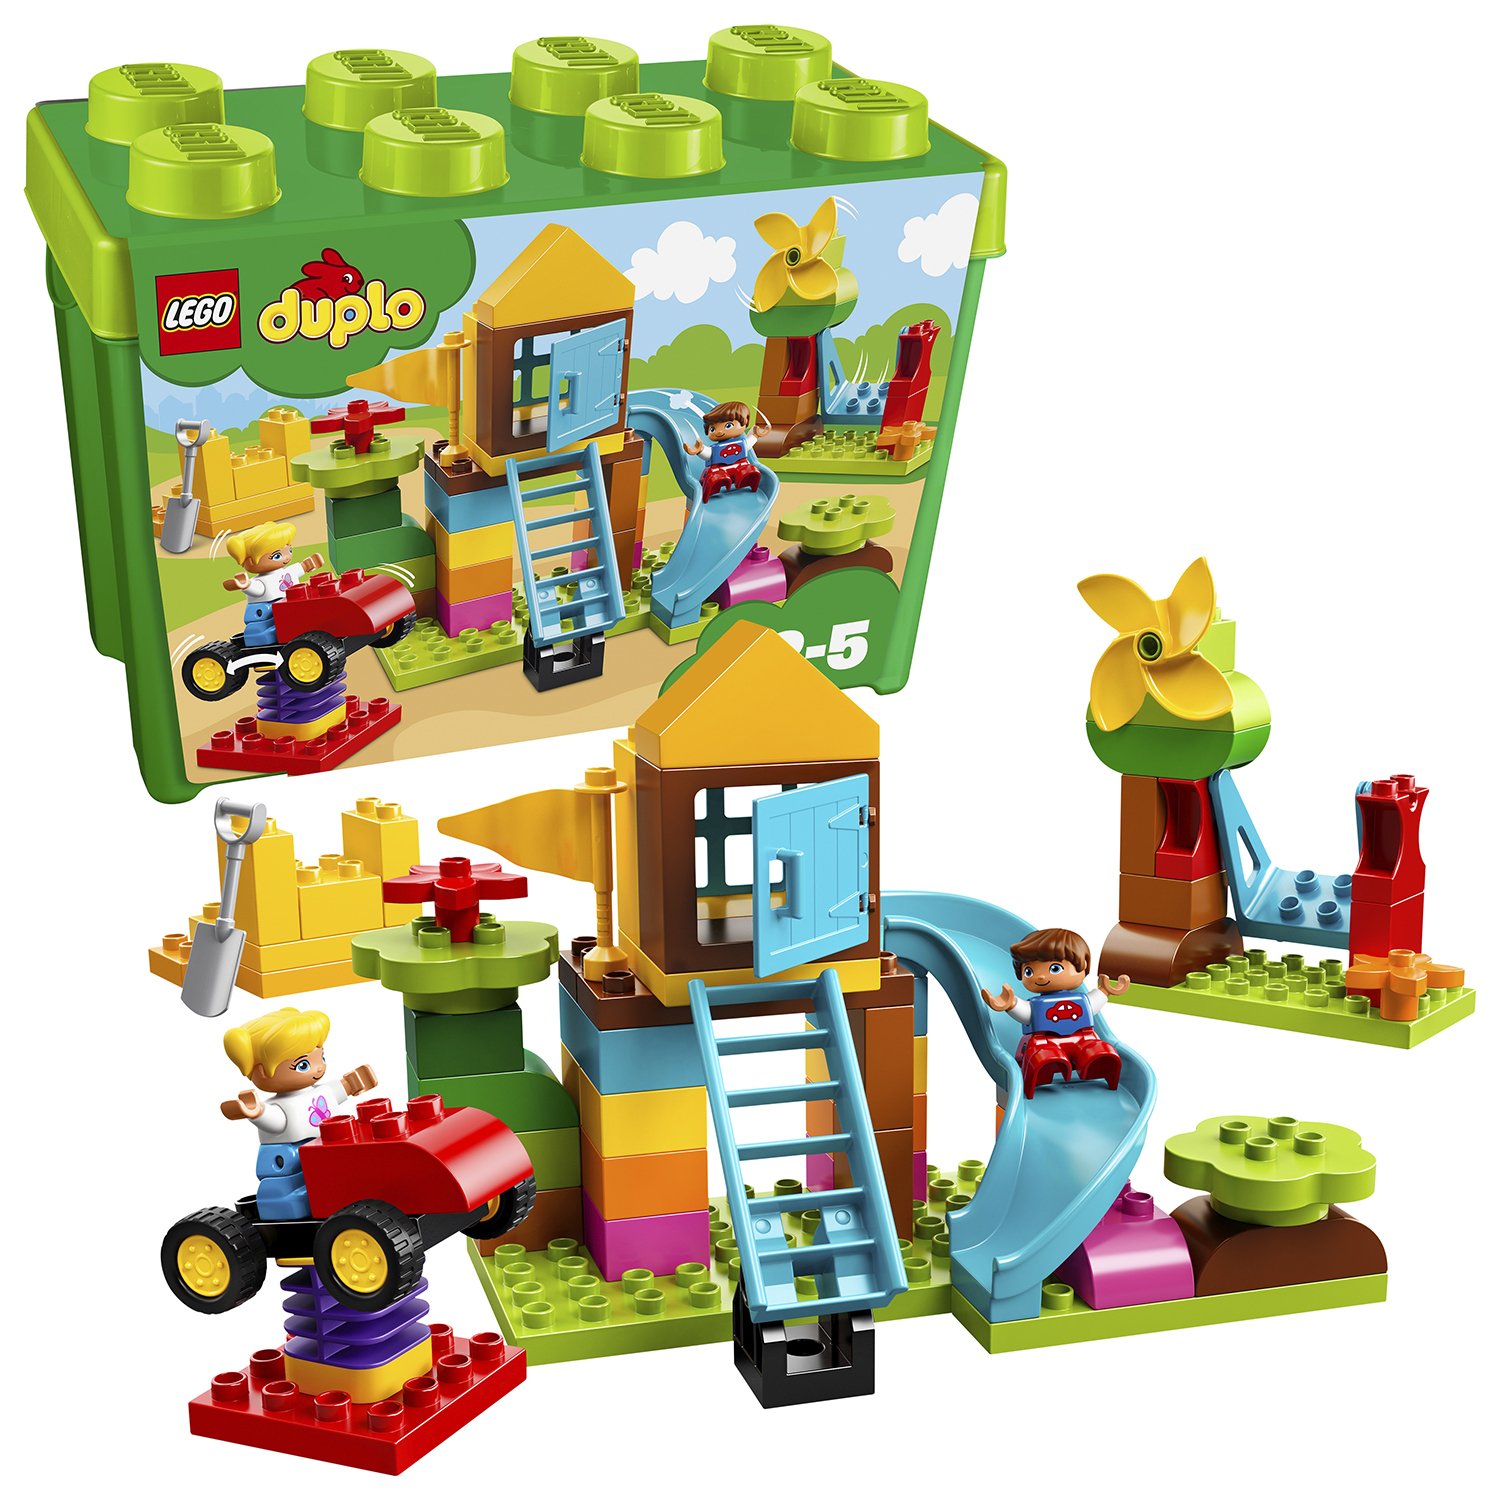 LEGO DUPLO My First Large Playground Brick Box Toy - 10864